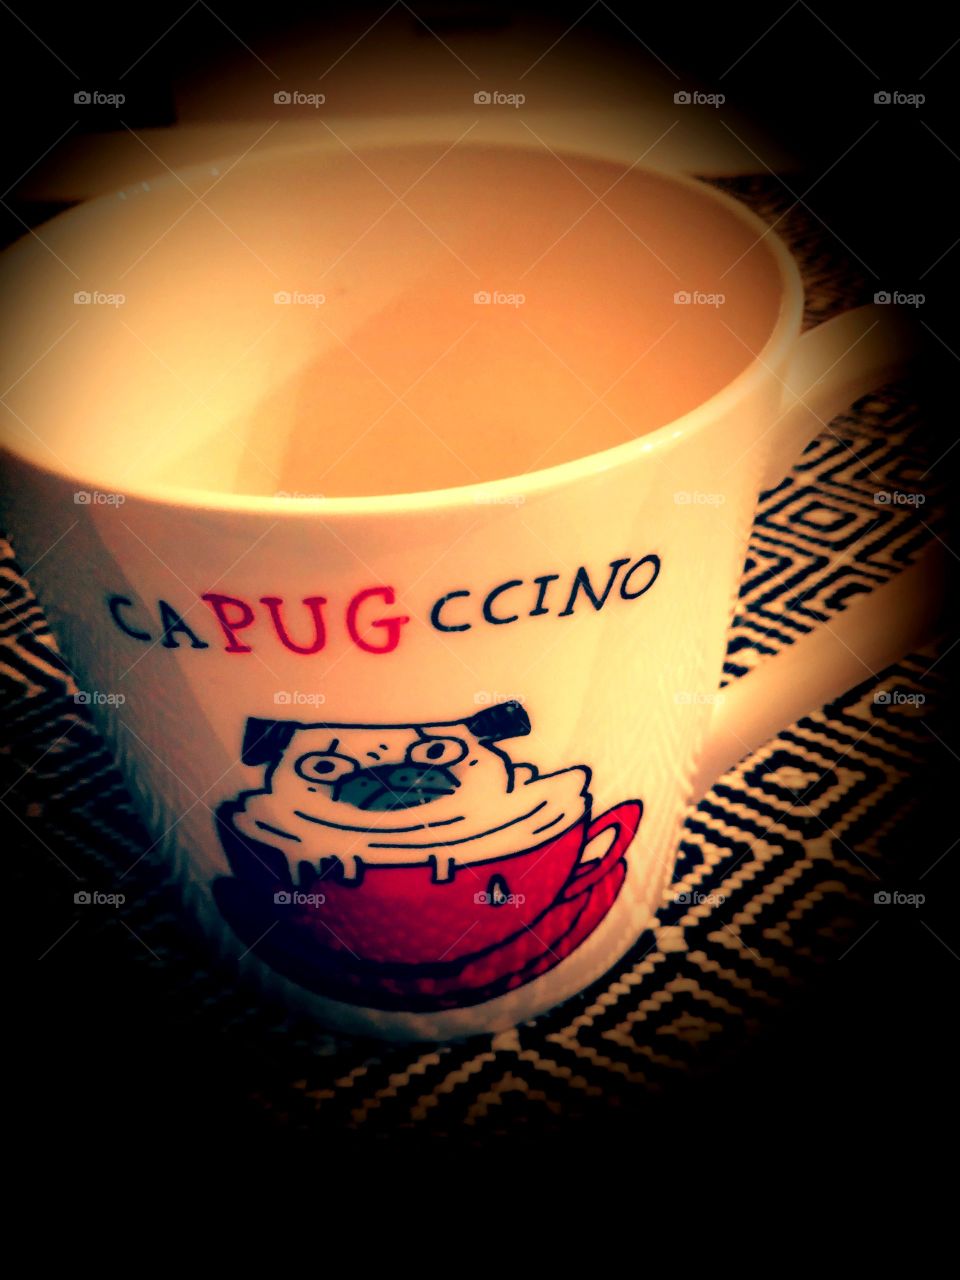 Coffee caPUGccino